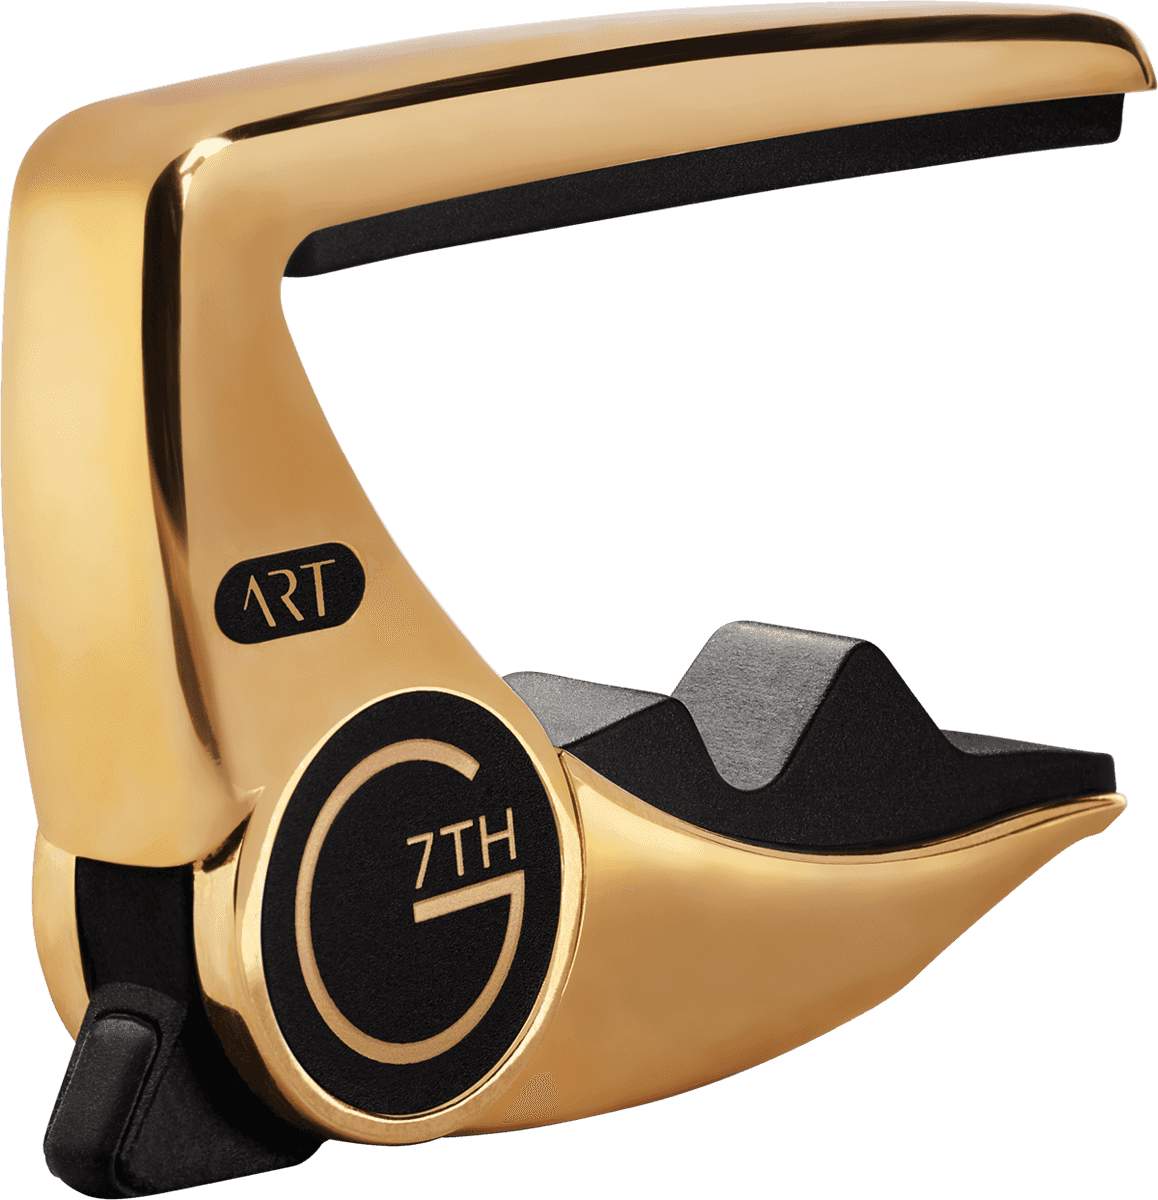 G7th Performance 3 Steel String 18kt Gold-plate - Cejilla - Variation 1